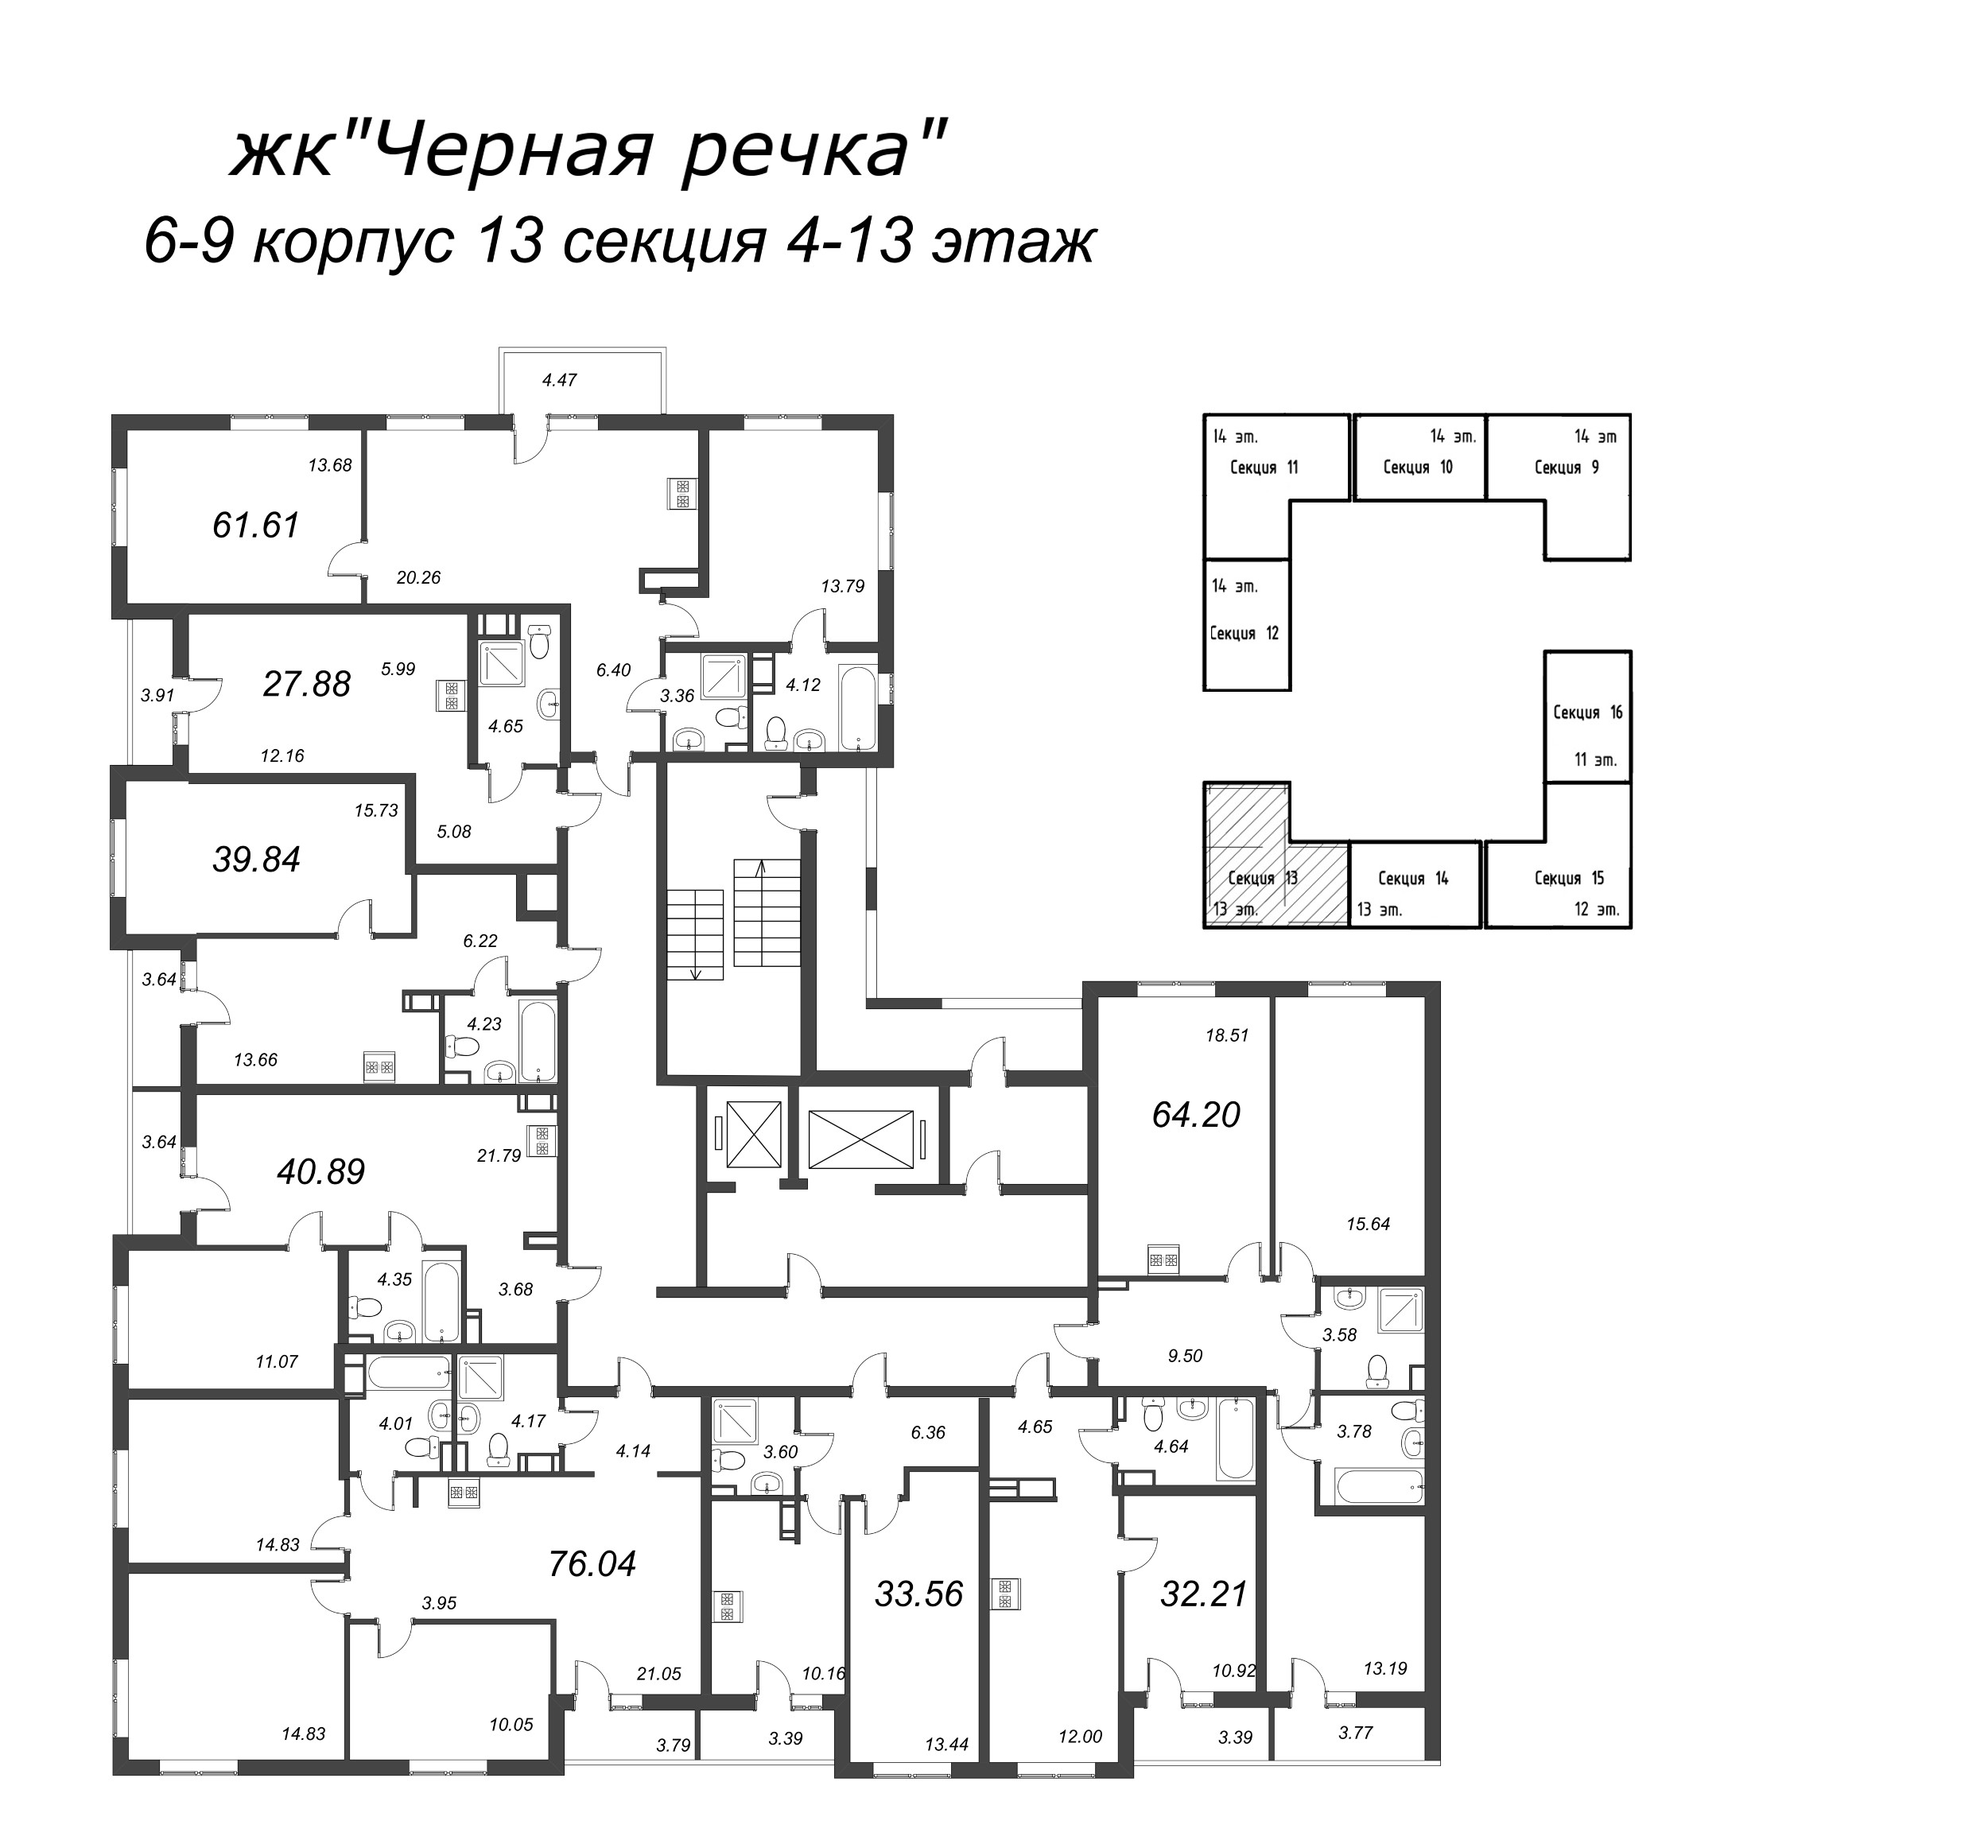 1-комнатная квартира, 33.56 м² в ЖК "Чёрная речка от Ильича" - планировка этажа